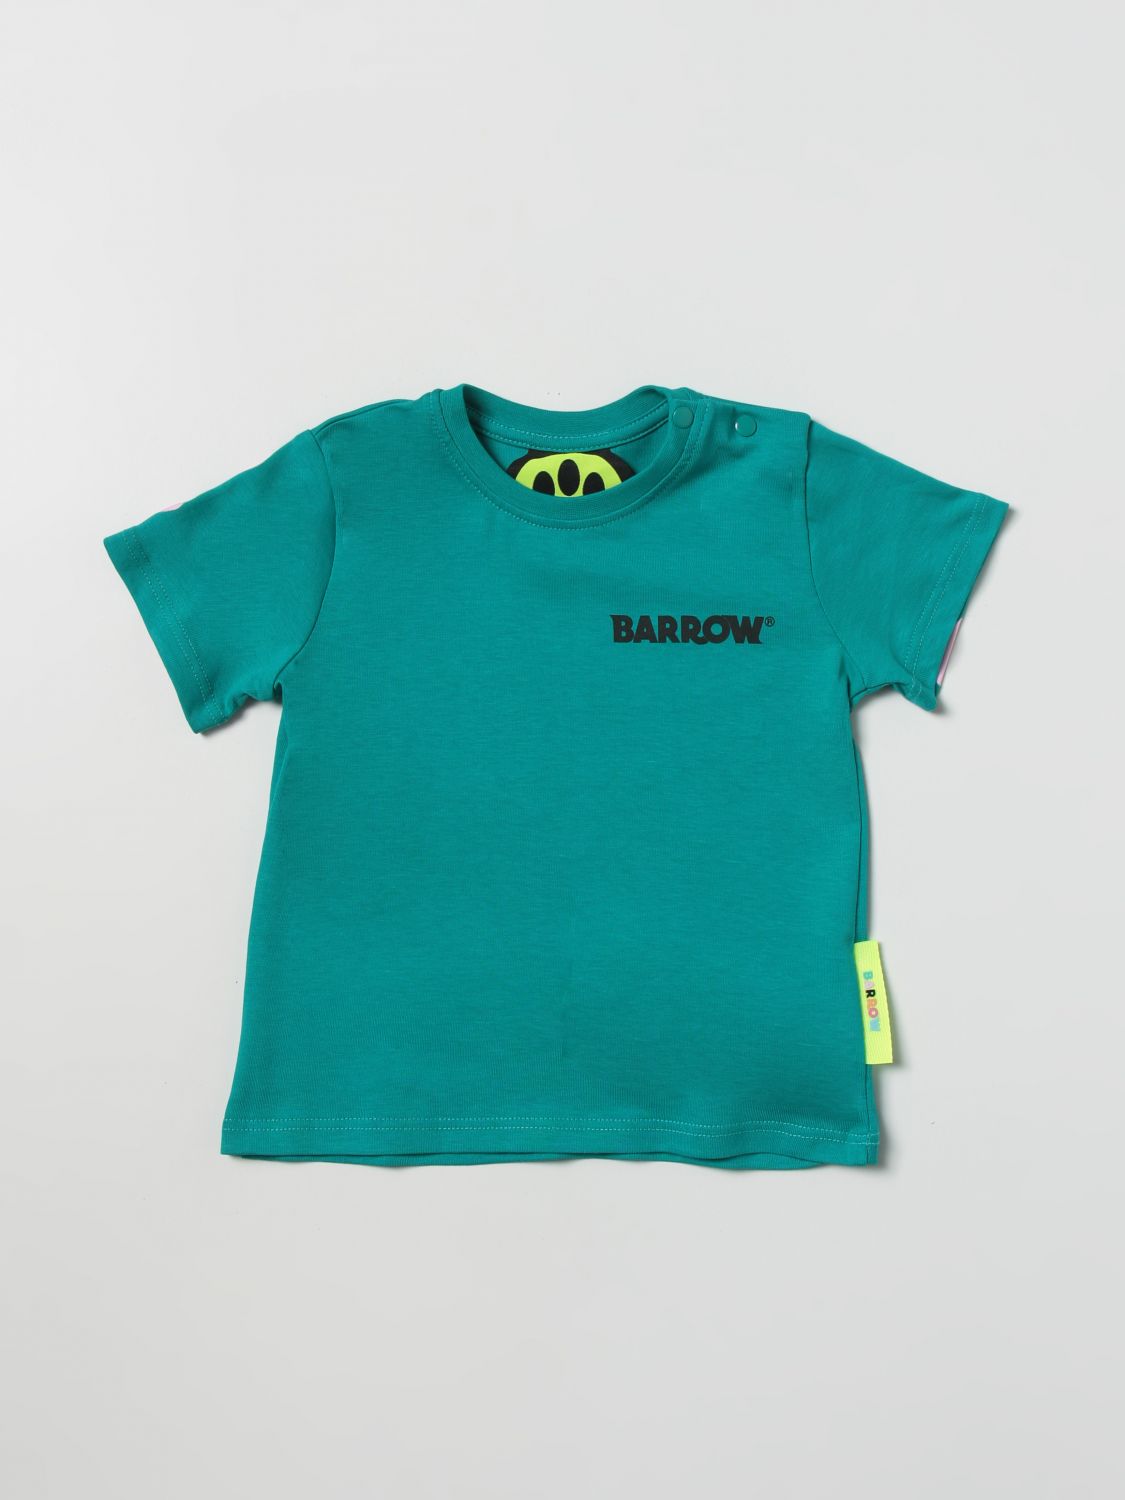 Barrow Babies' T-shirt  Kids Kids In Green